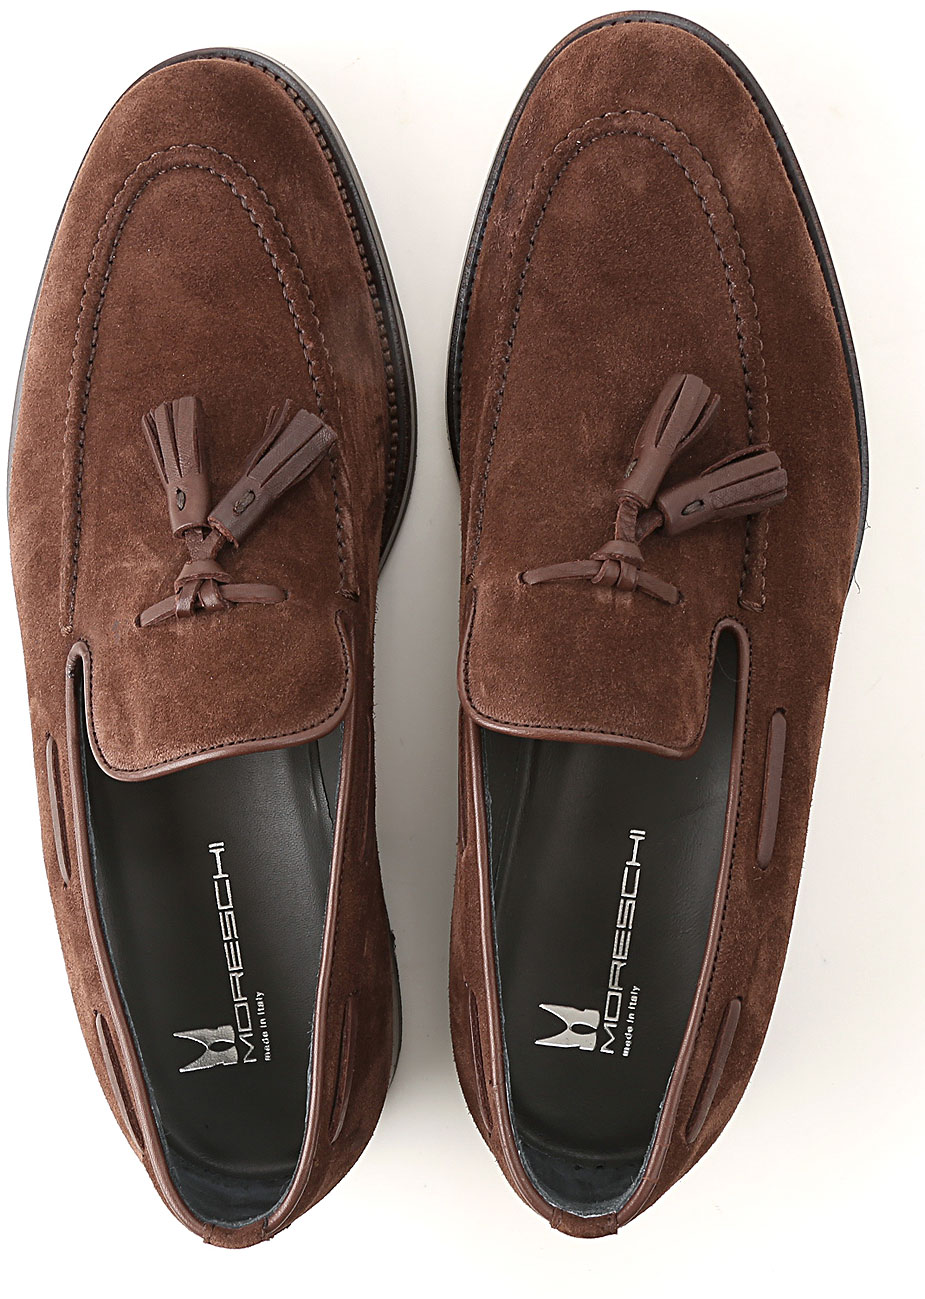 Mens Shoes Moreschi, Style code: 040805-marrone-